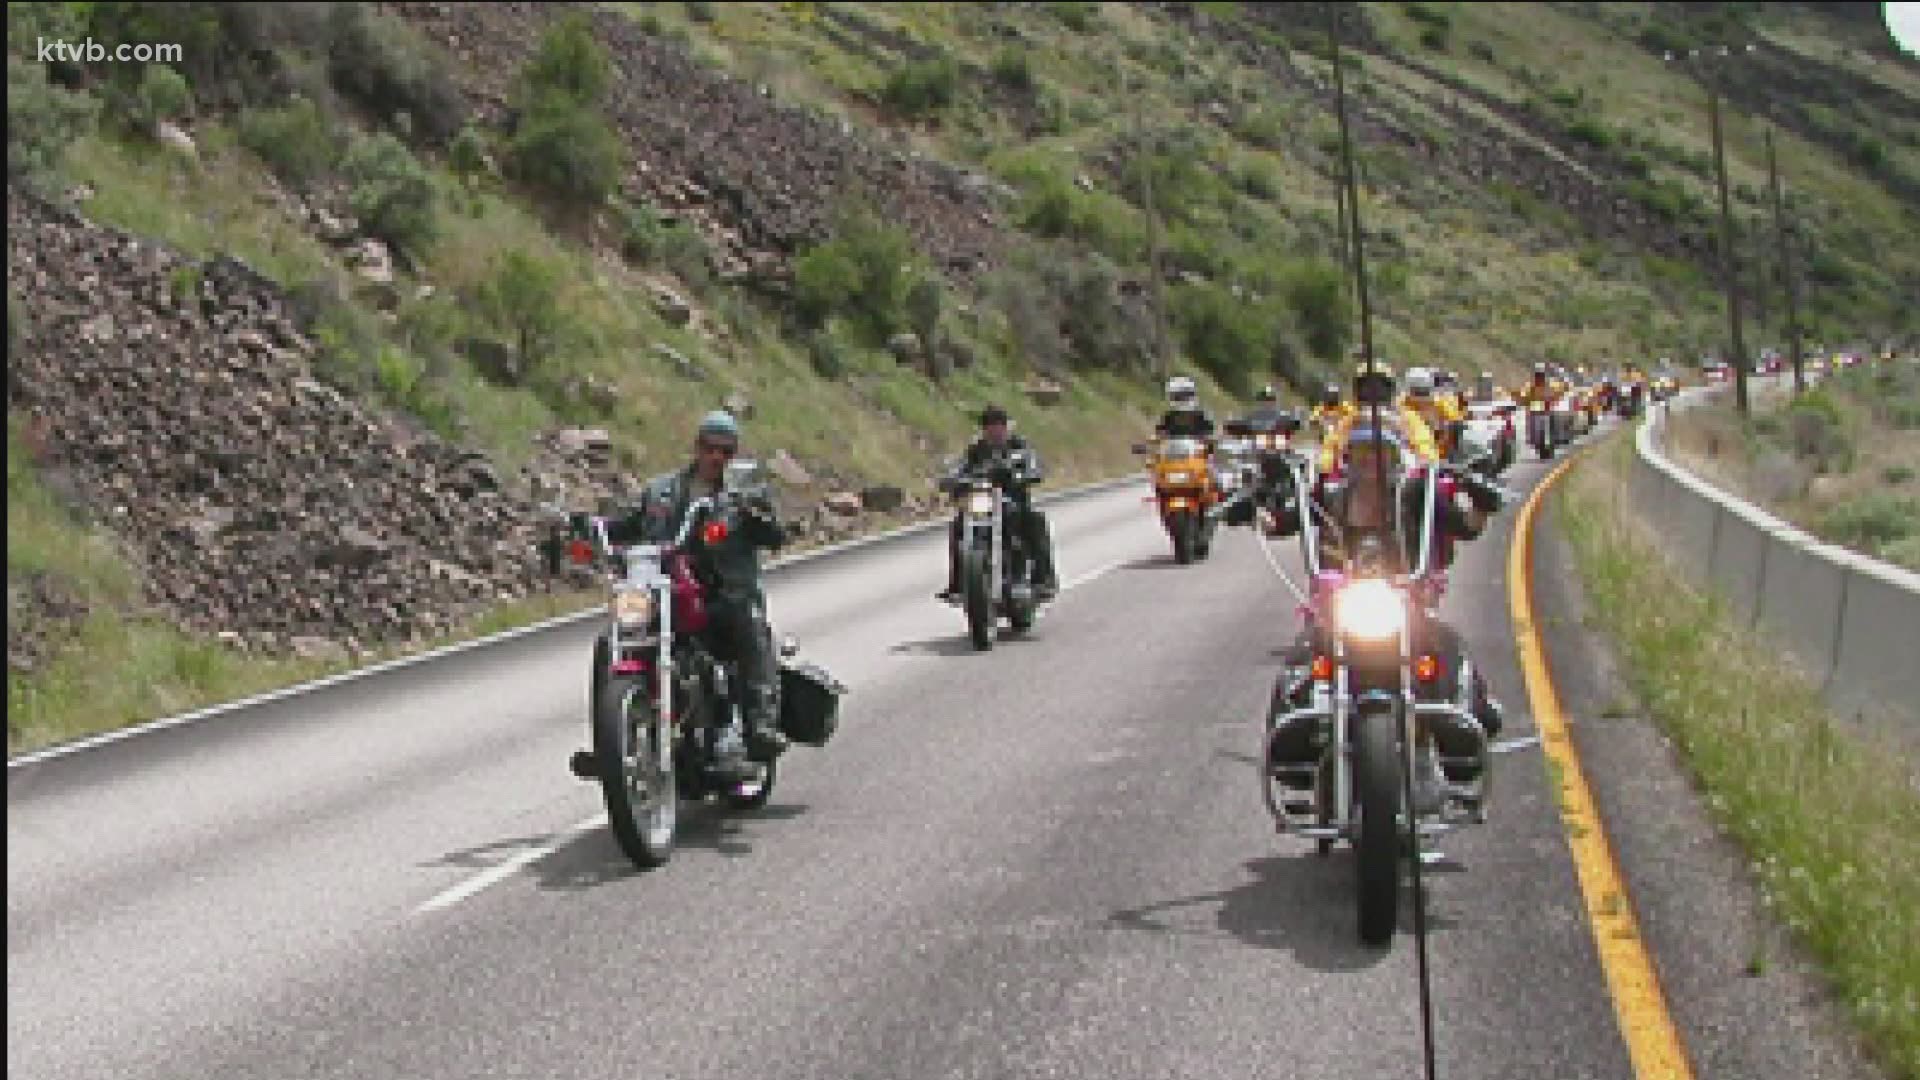 Motorcycle Awareness Ride